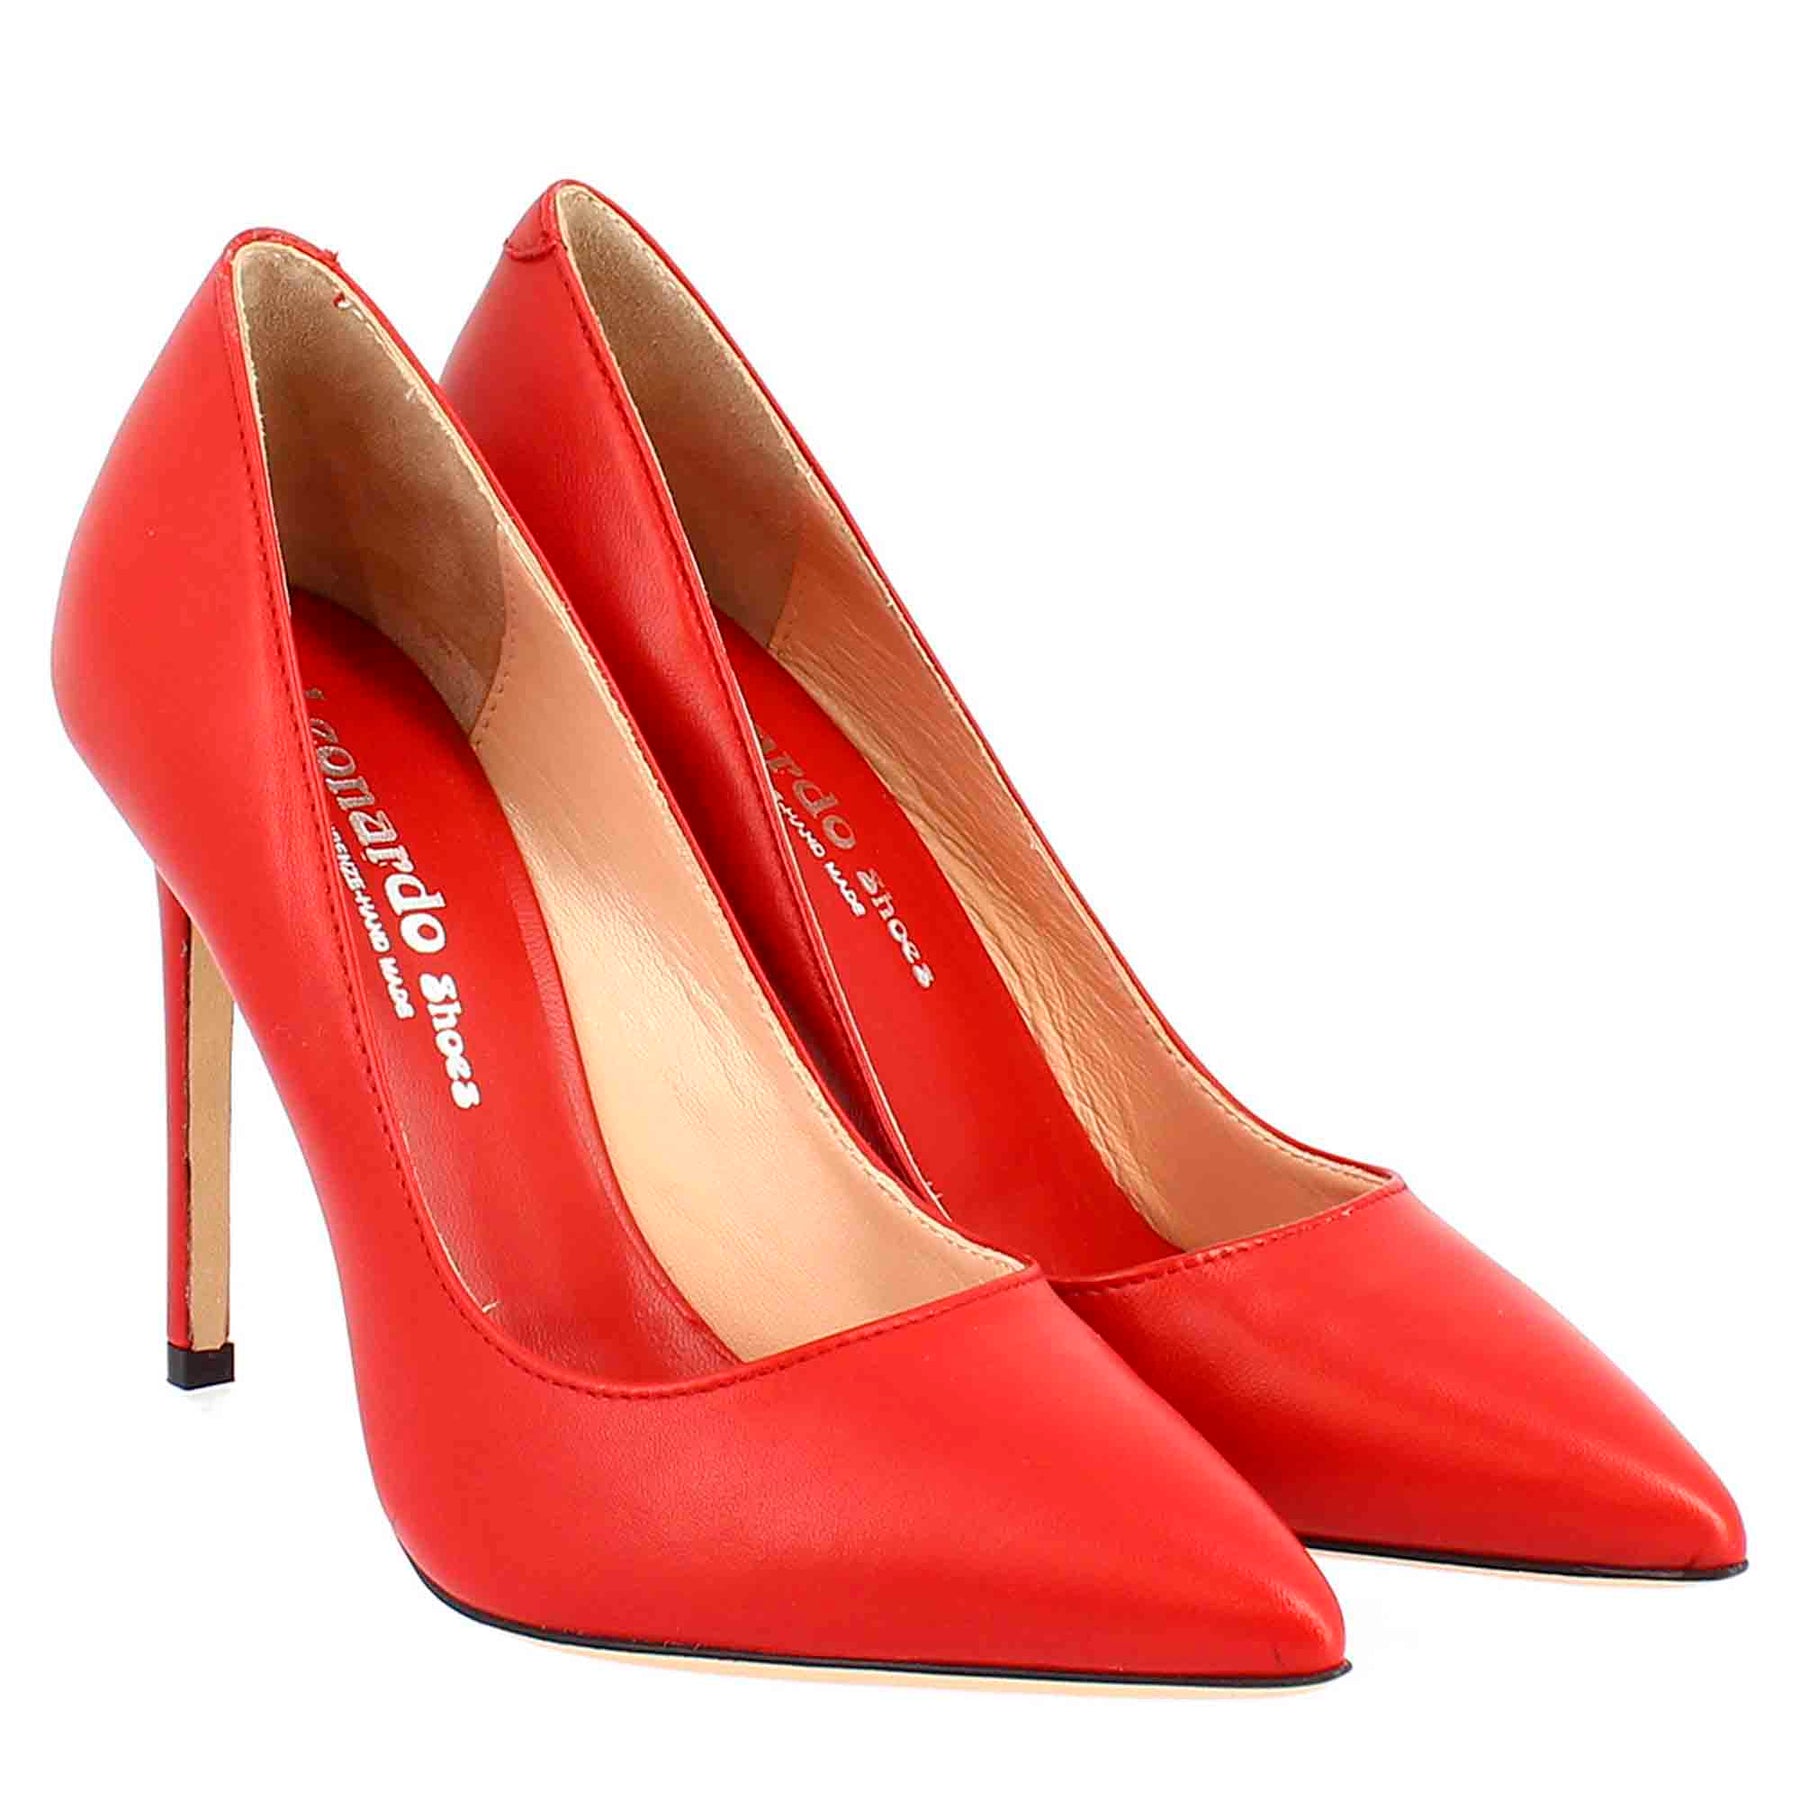 LOUIS VUITTON - Women's Fashion Red High Heels Shoes Magazine AD - D466 |  eBay